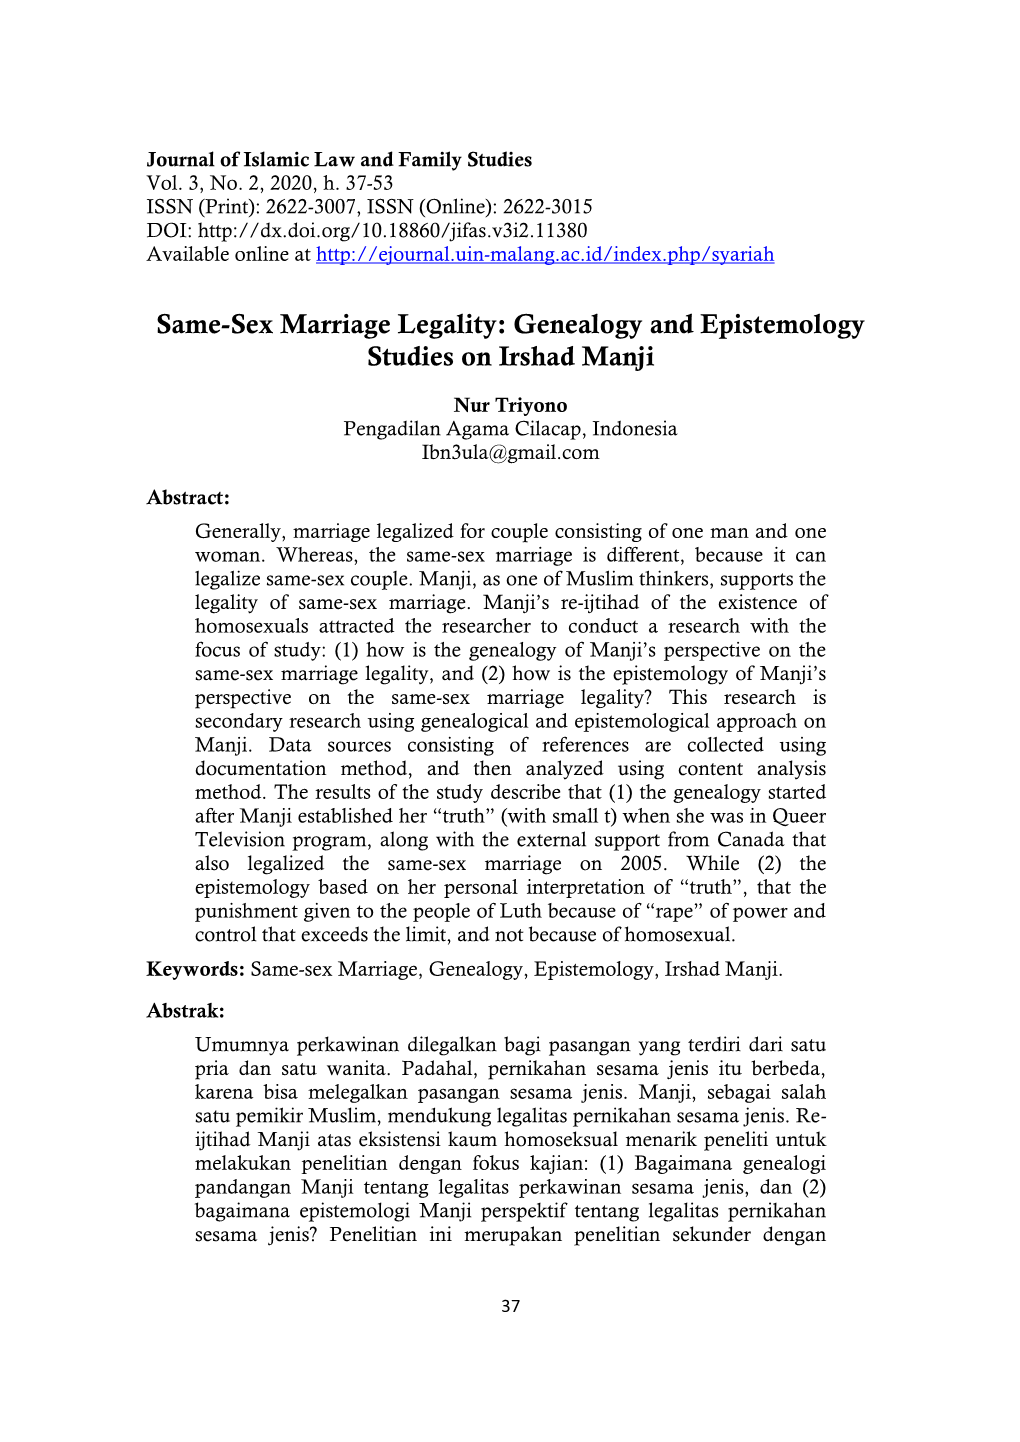 Genealogy and Epistemology Studies on Irshad Manji